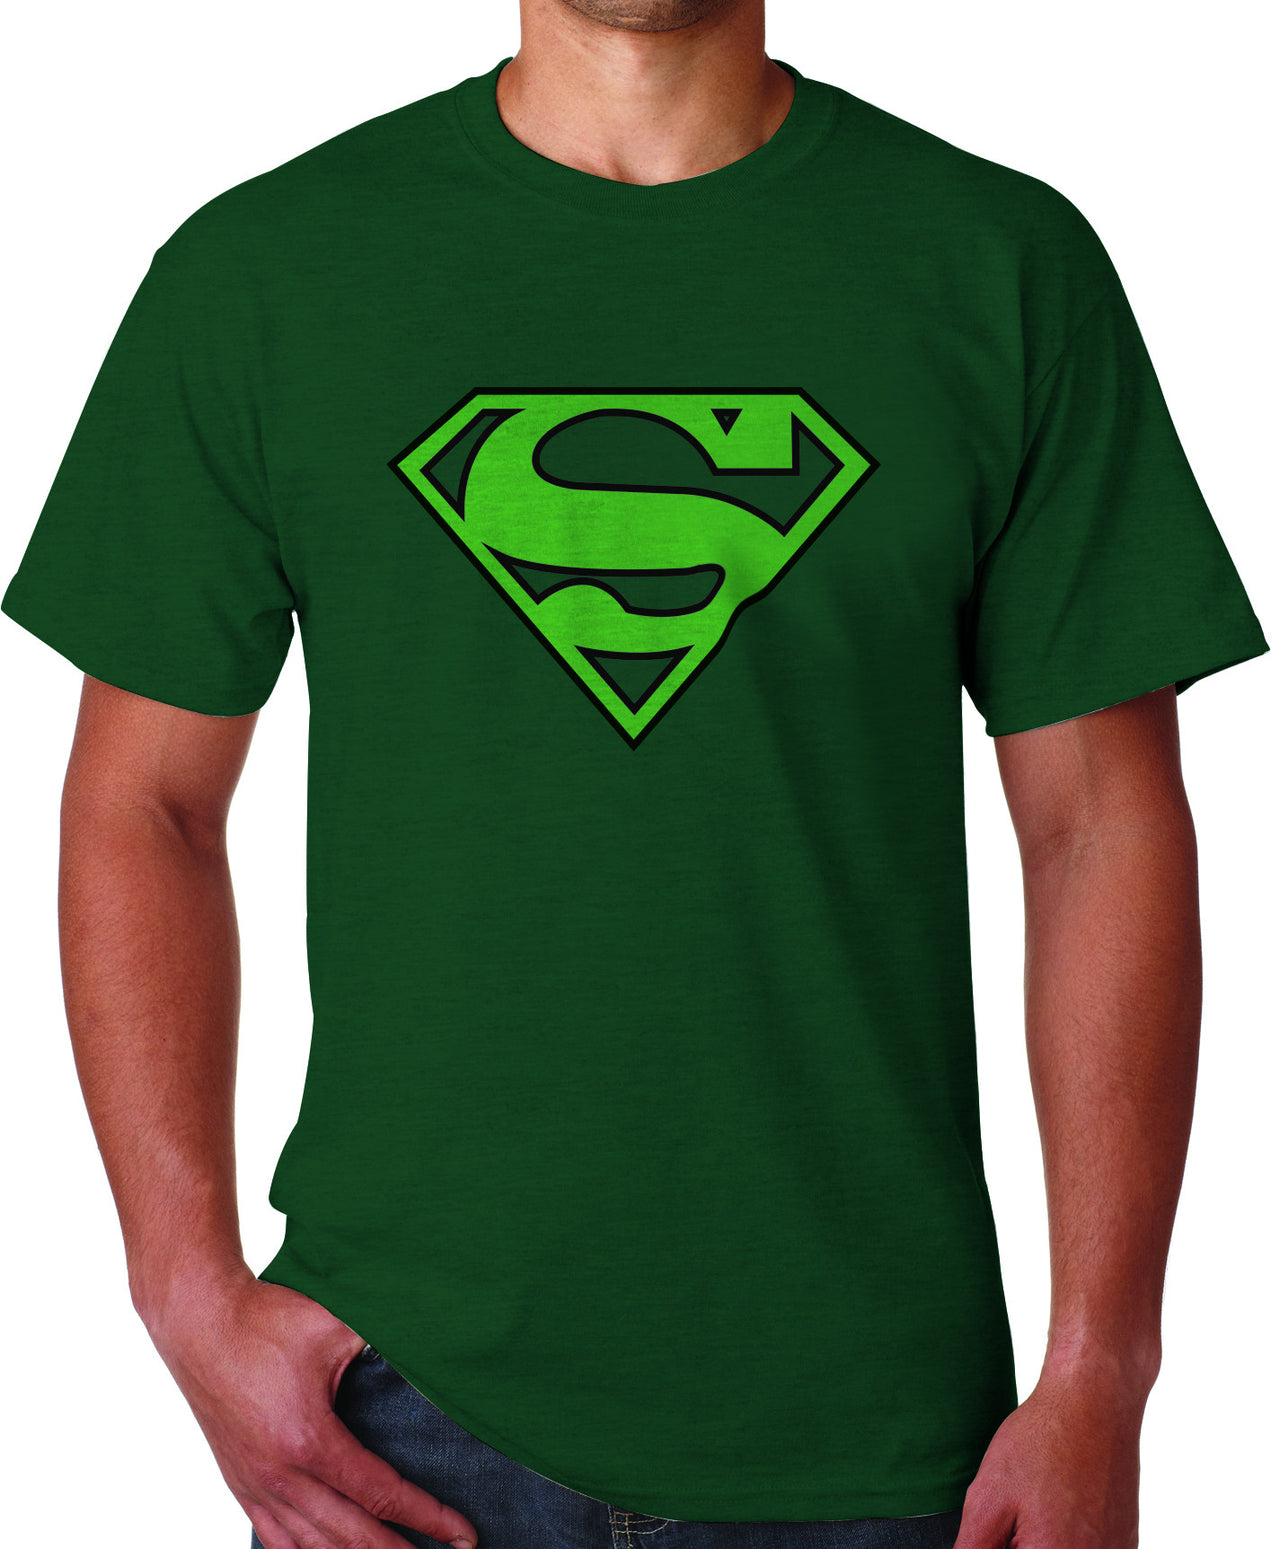 Superman Green Logo on Dark Green tshirt for Men - TshirtNow.net - 1